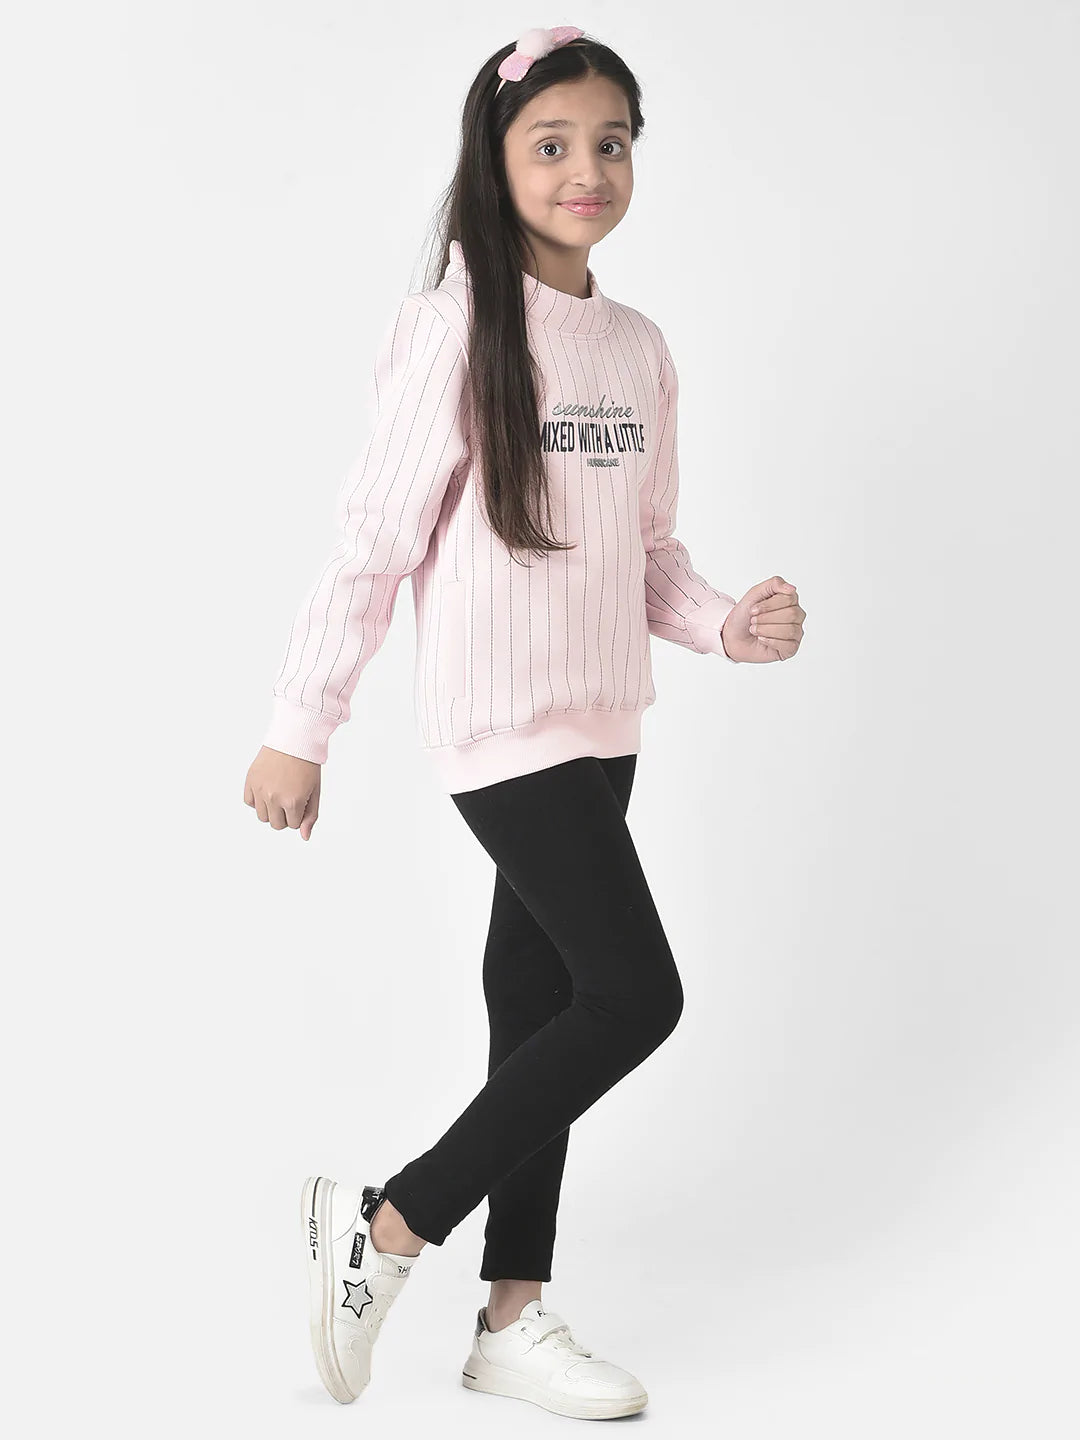  Pink Striped Cowl Sweatshirt